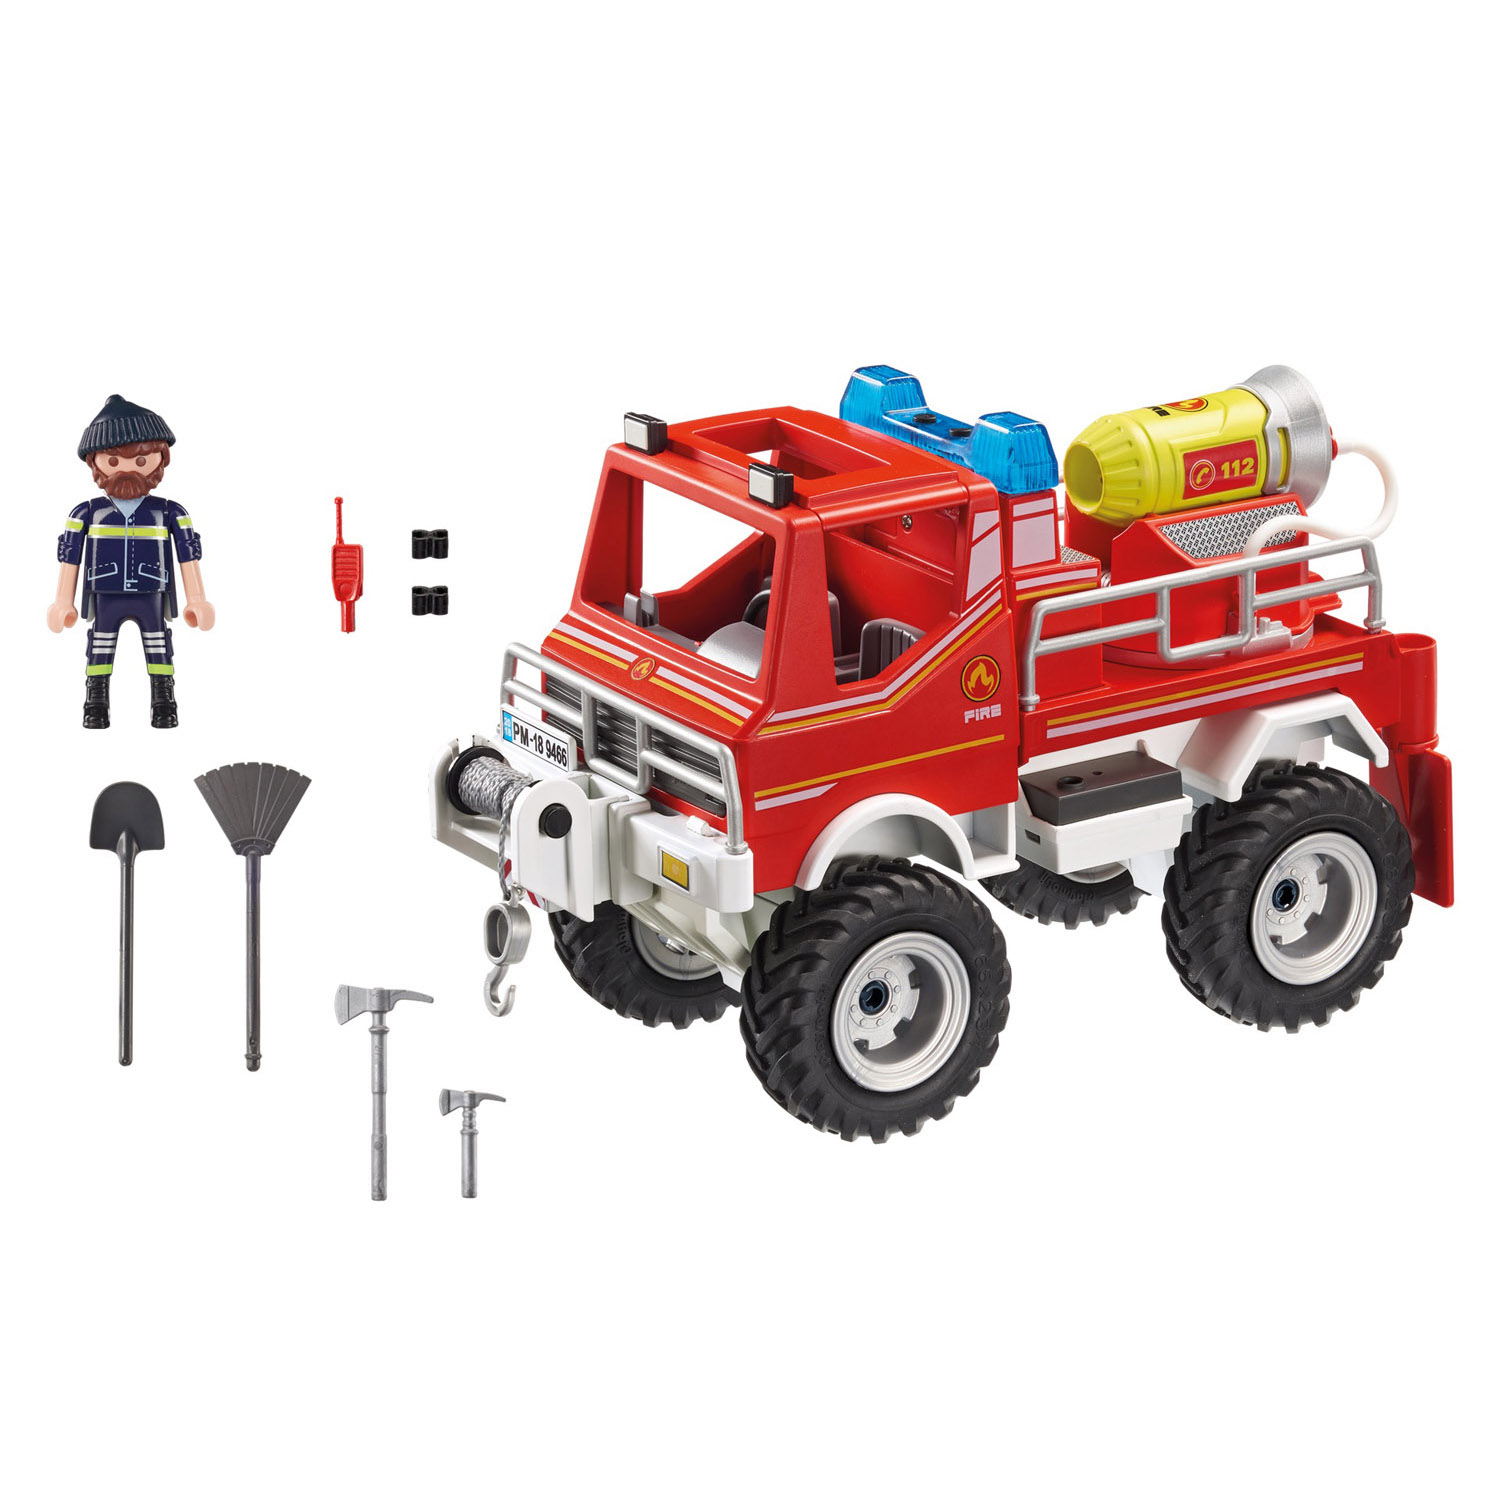 Playmobil Конструктор Пожарная машина 9466pm - фото 2